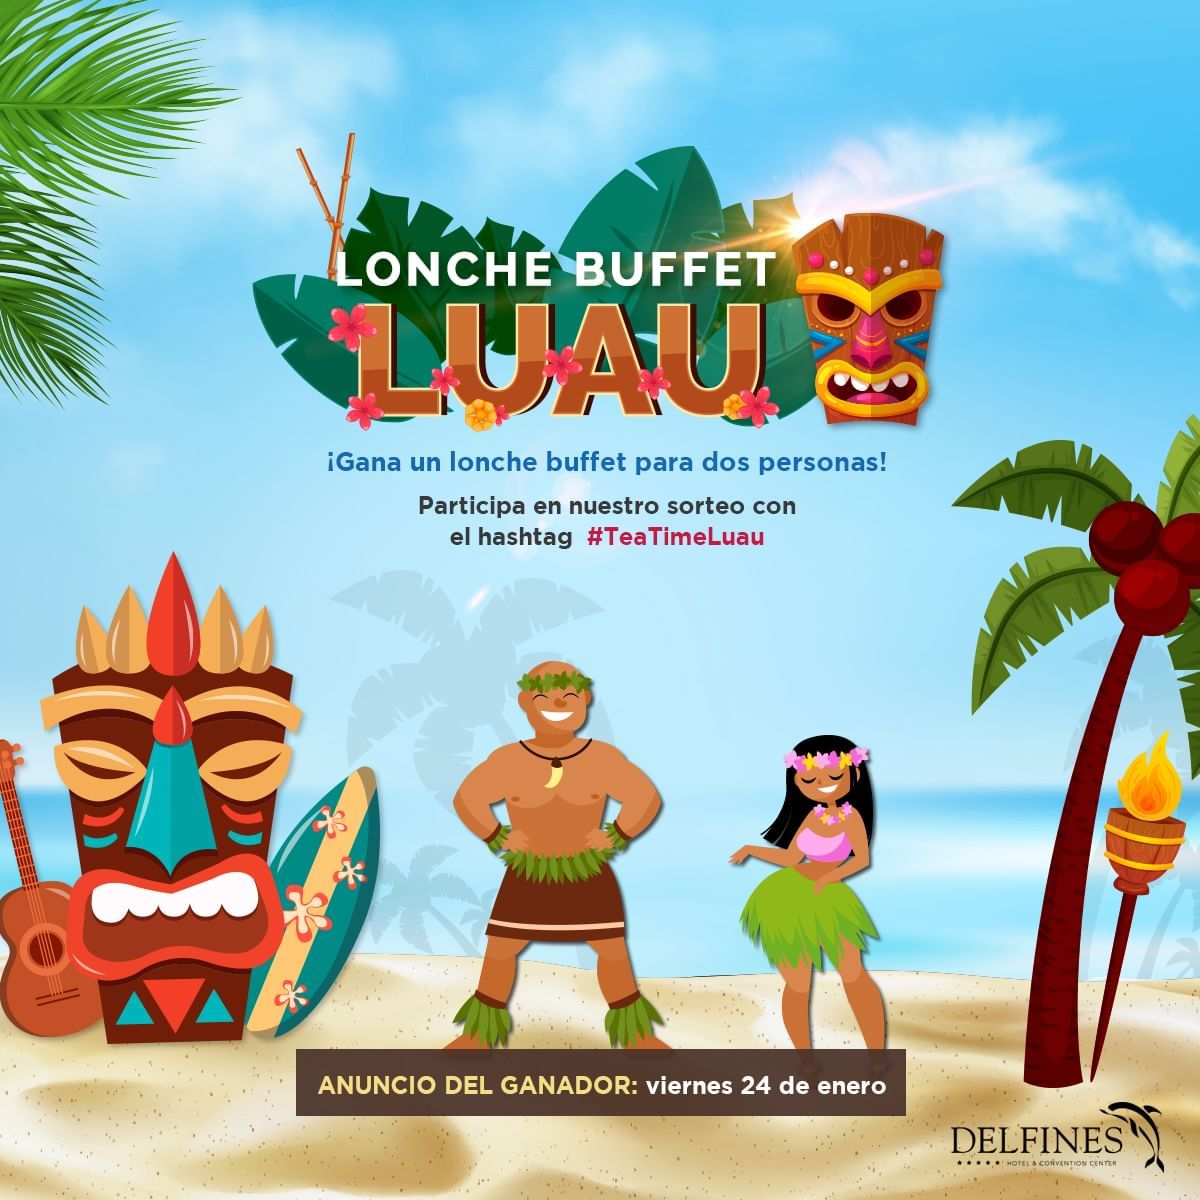 Lonche Buffet Luau Poster in Delfines Hotel